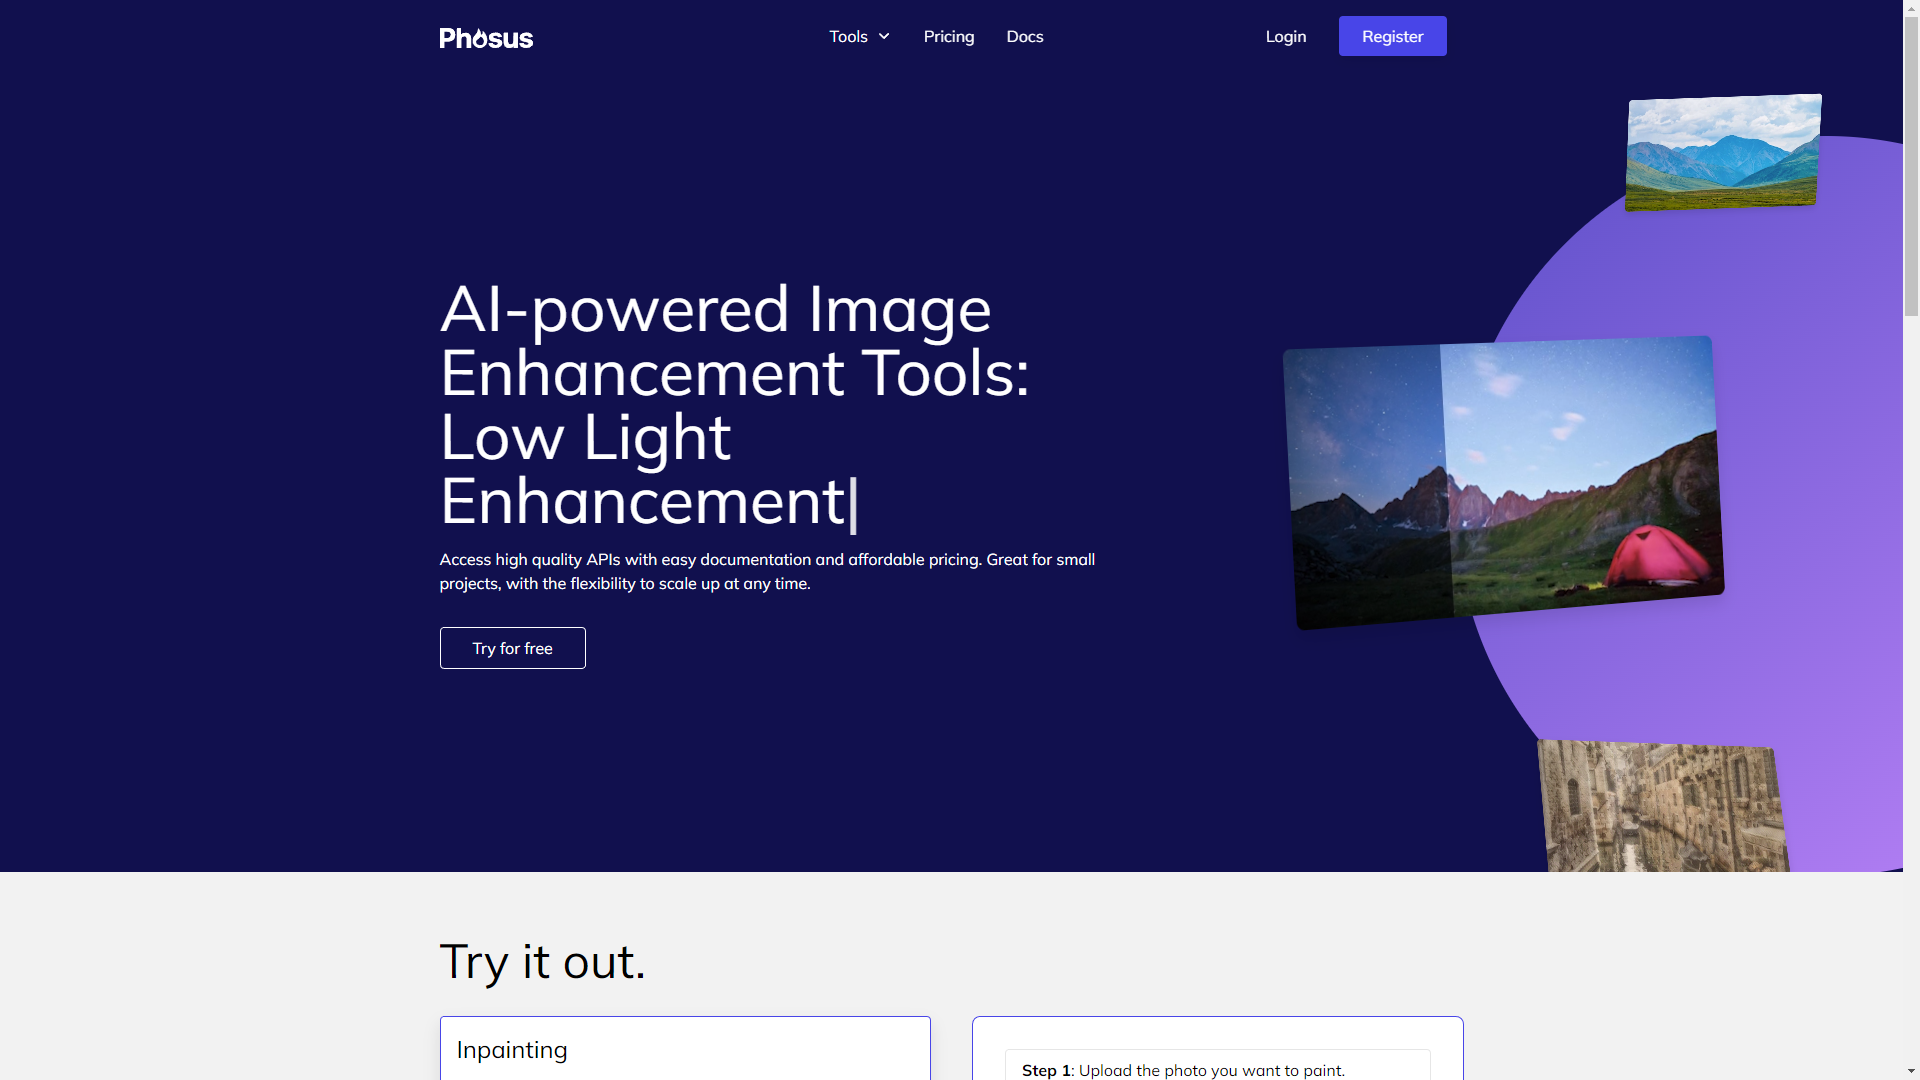 Phosus - AI-powered Image Enhancement Tools